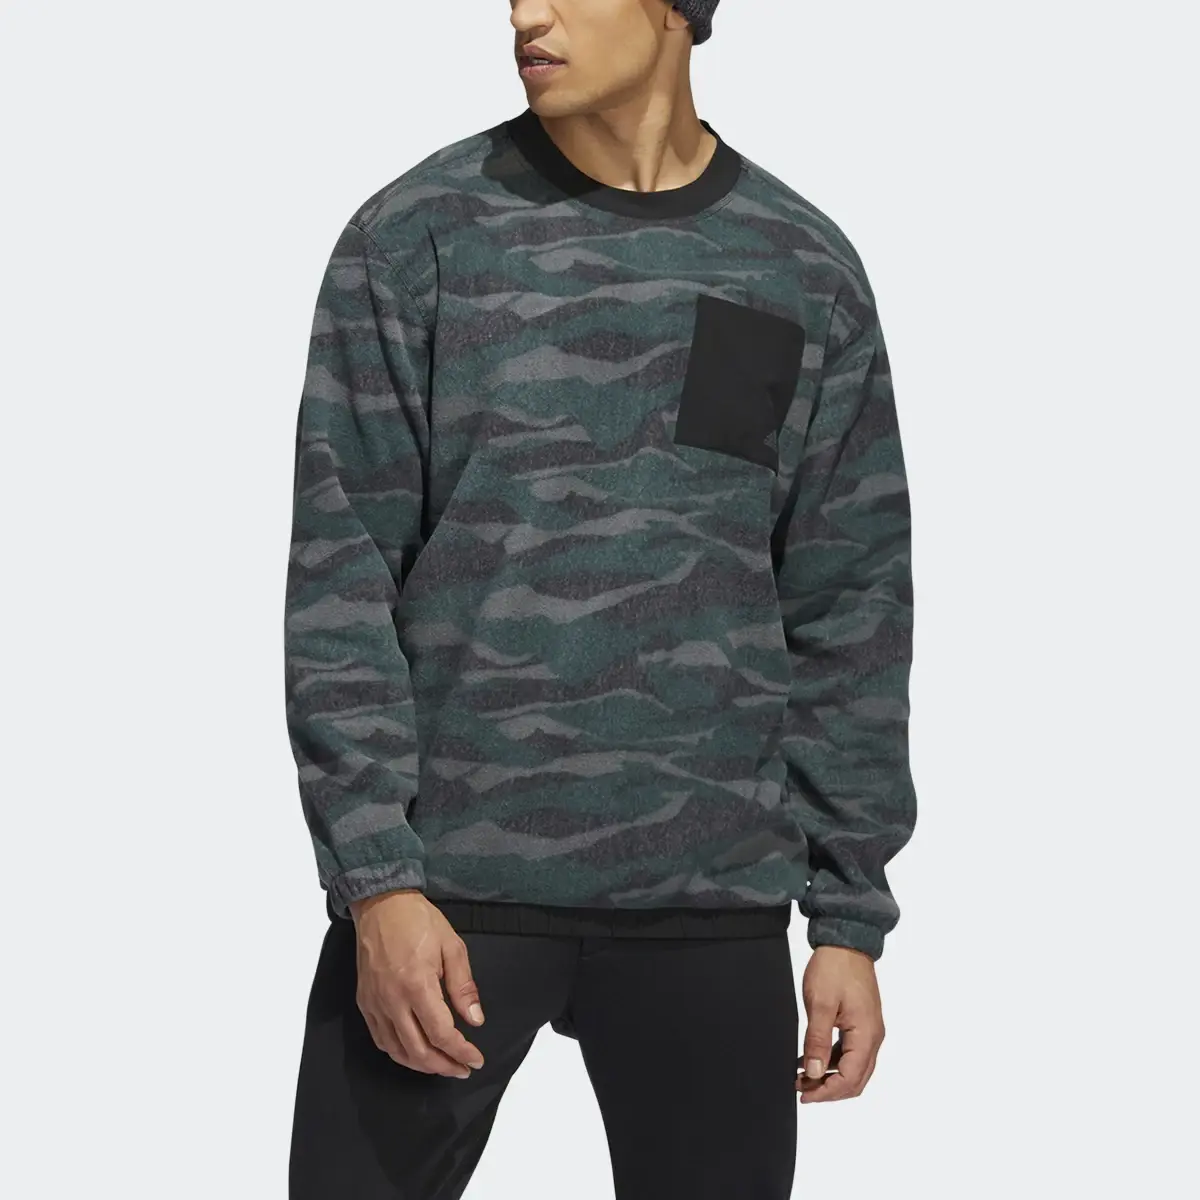 Adidas Texture-Print Sweatshirt. 1